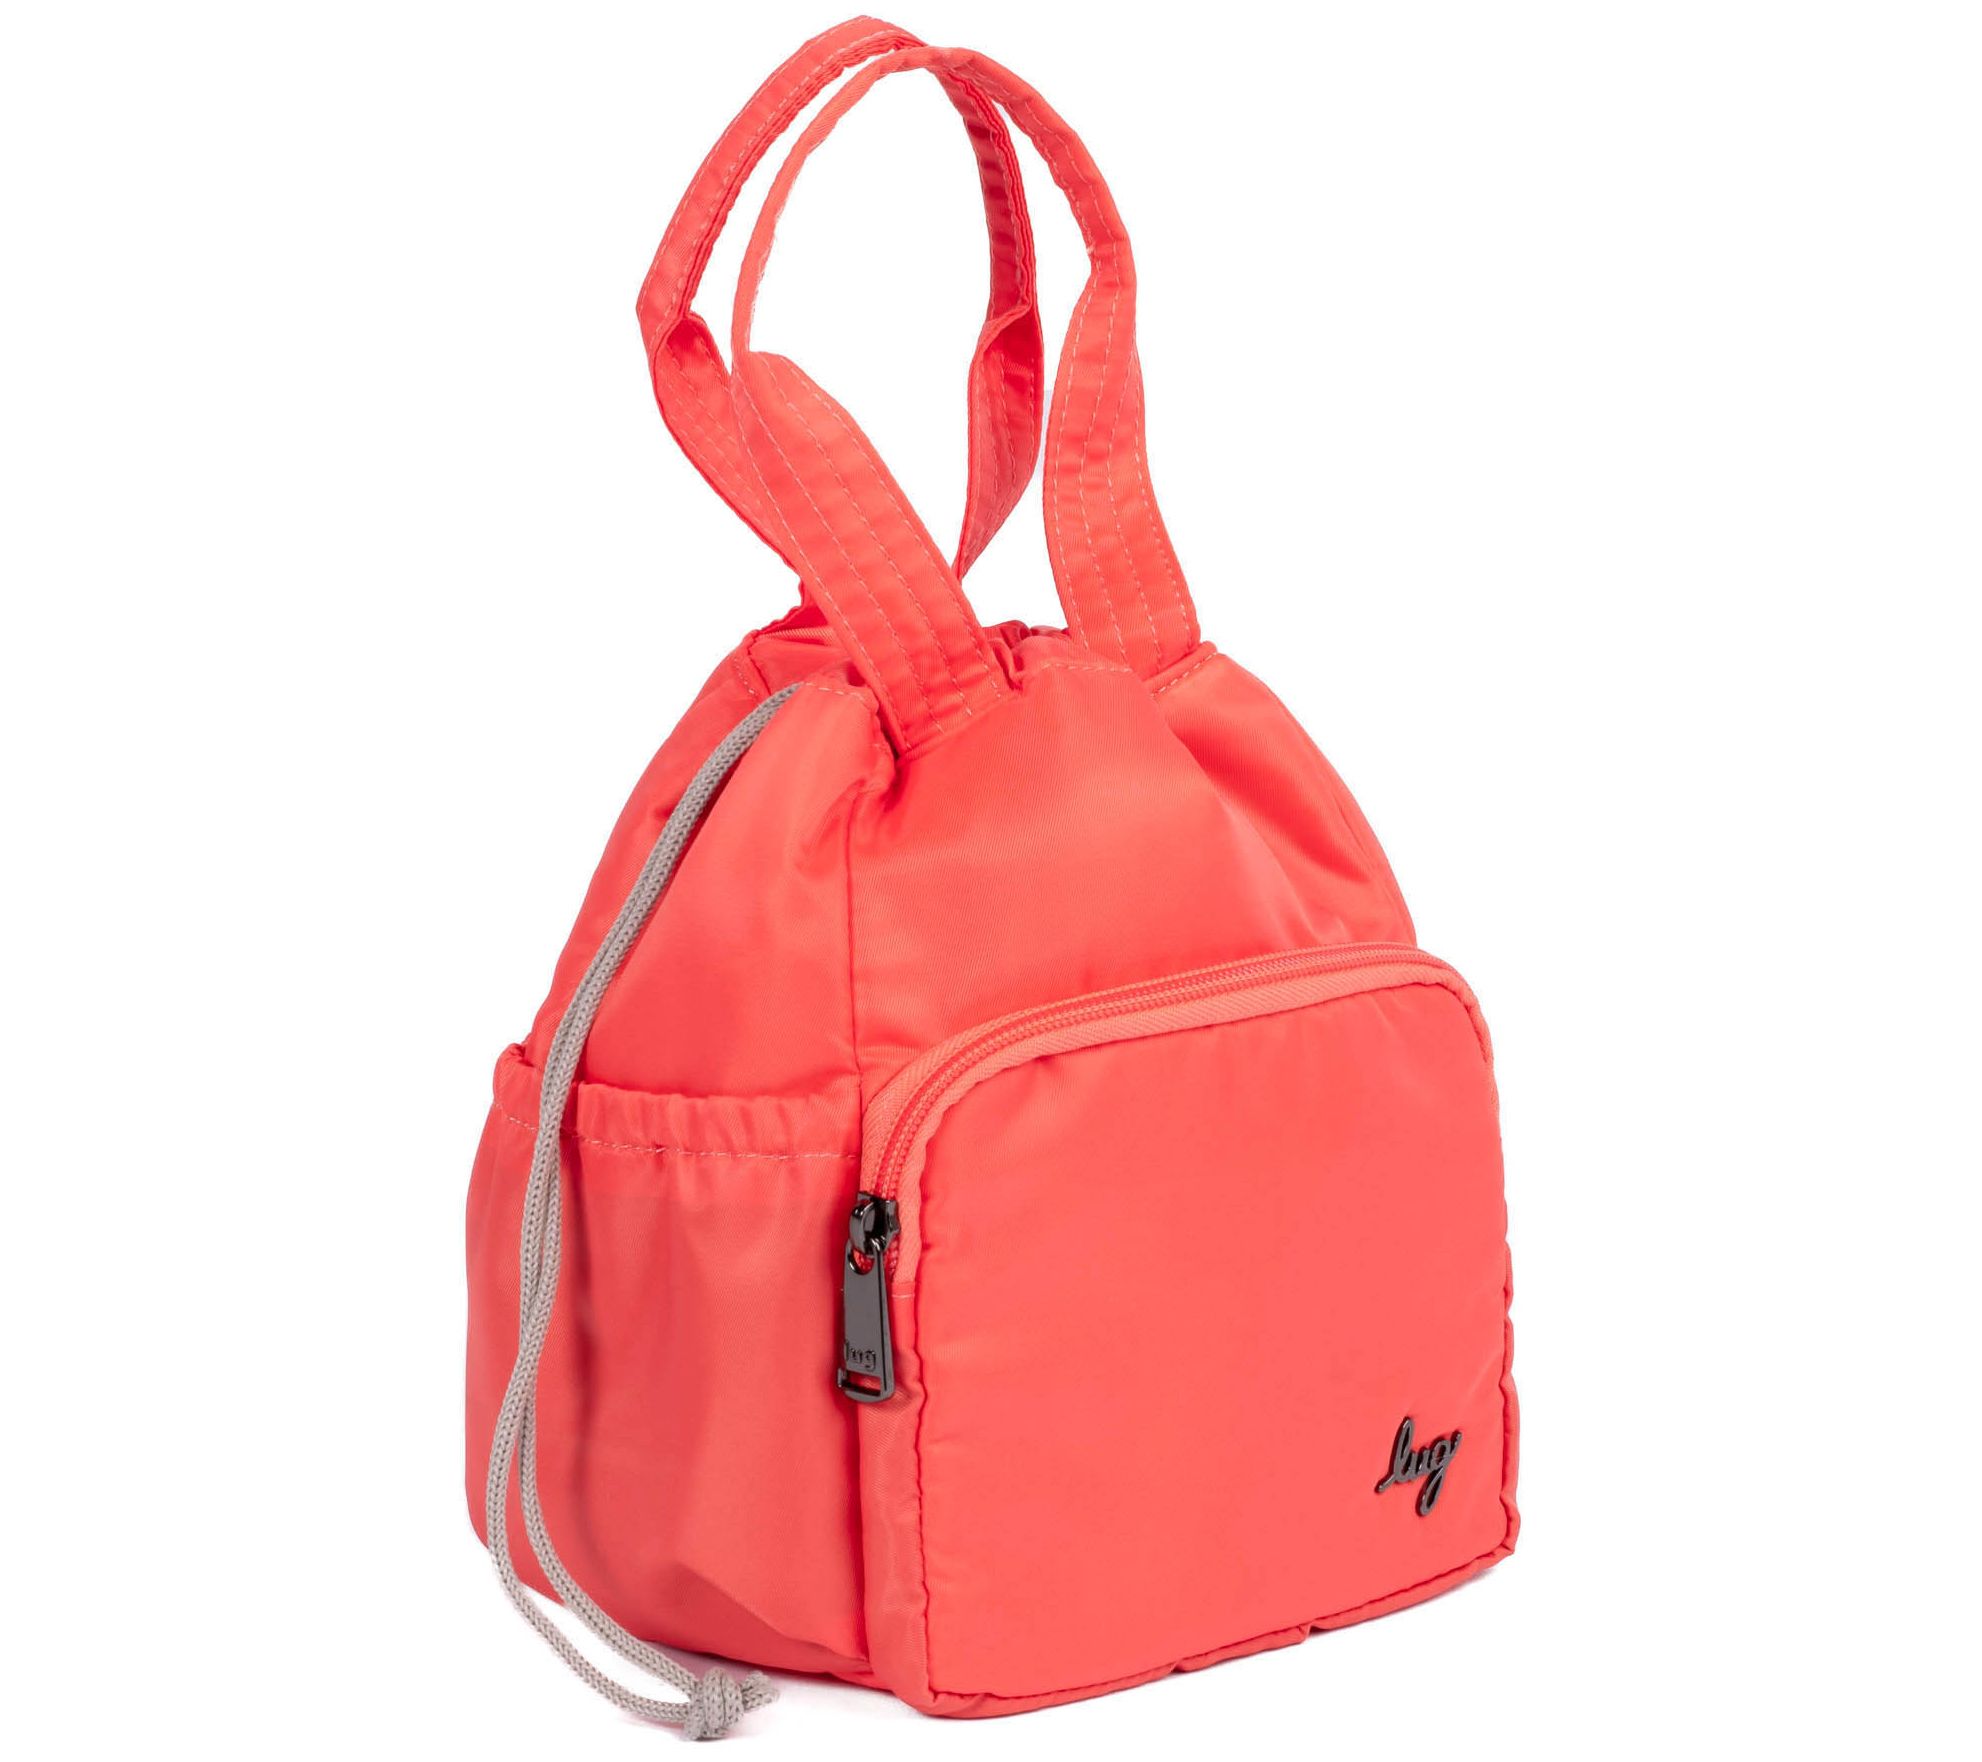 Sugarplum Style Tip  Shopping Designer Handbags for Less - Hi Sugarplum!